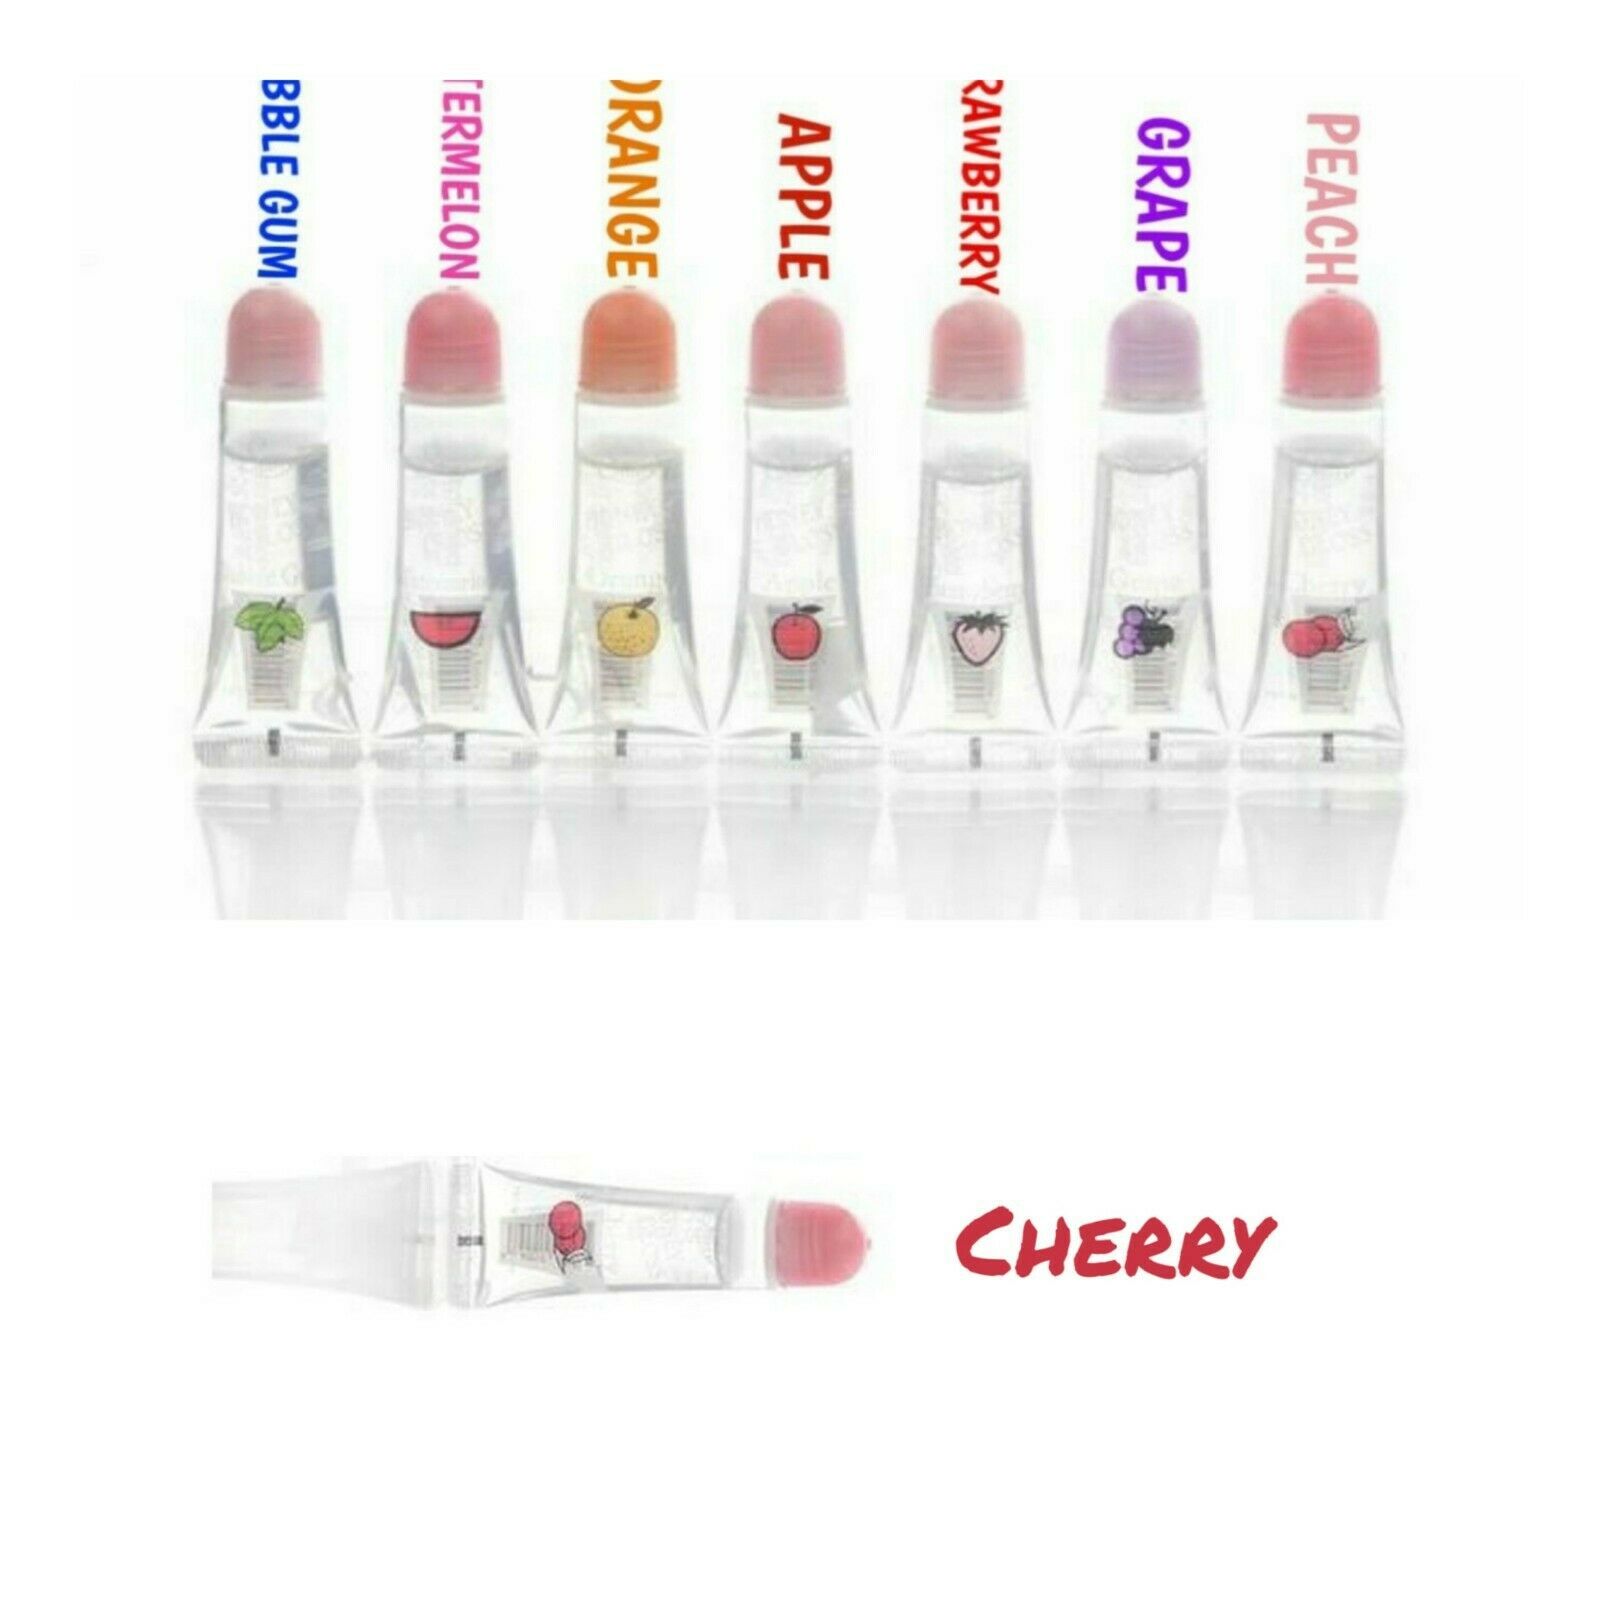 Starry Honey Crystal Lip Gloss Set - All 8 PCs! with Vitamin E, moisturize lips